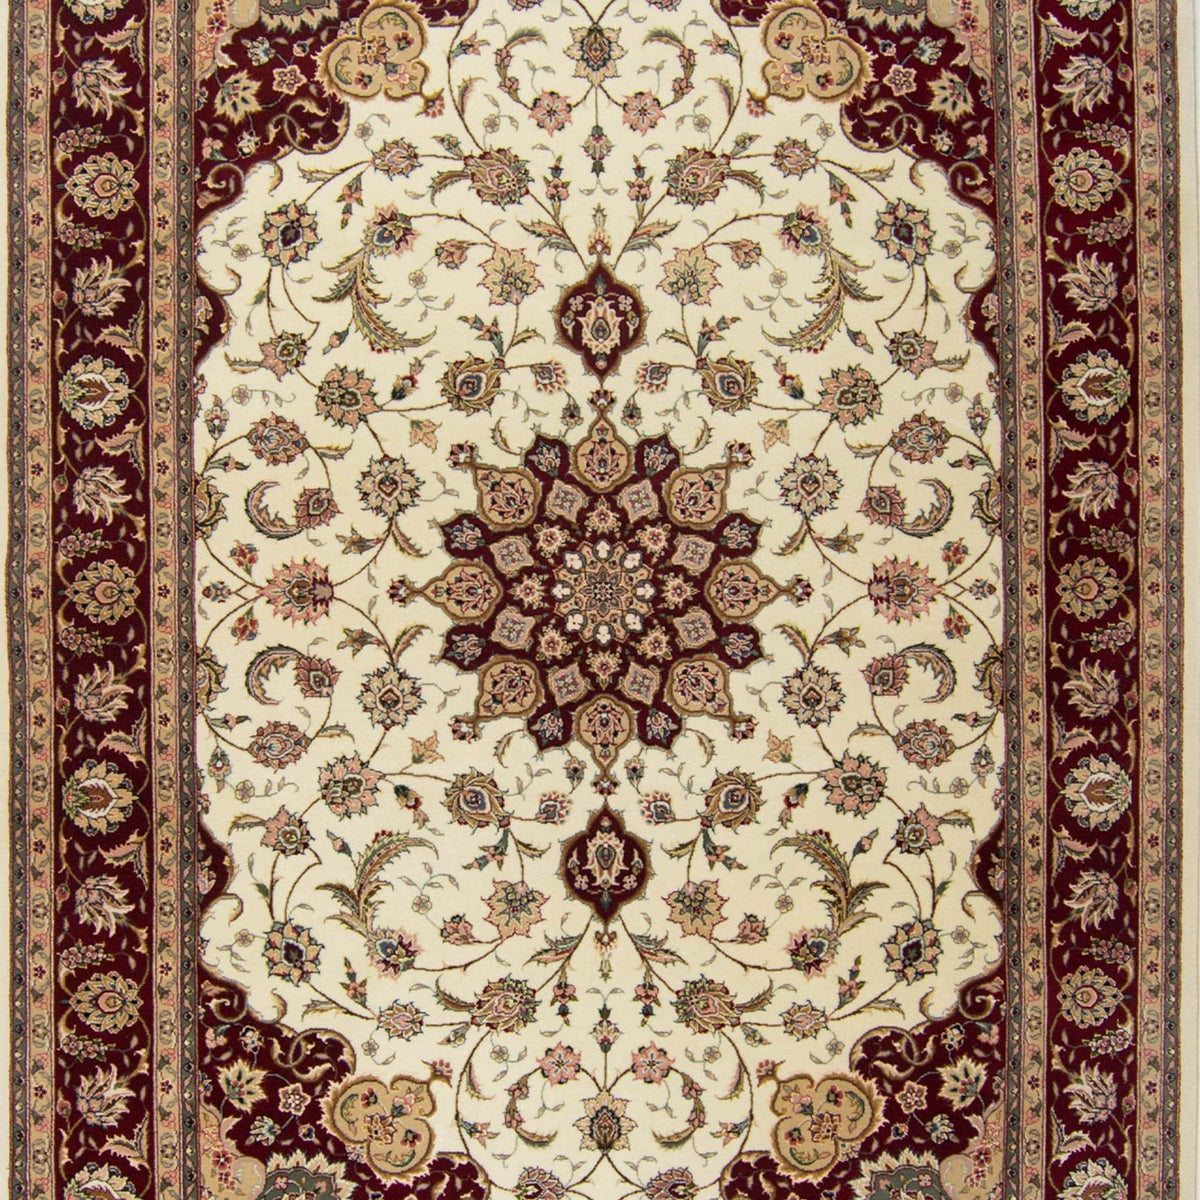 Super Fine Hand-knotted Wool and Silk Tabriz Rug 183 cm x 275 cm